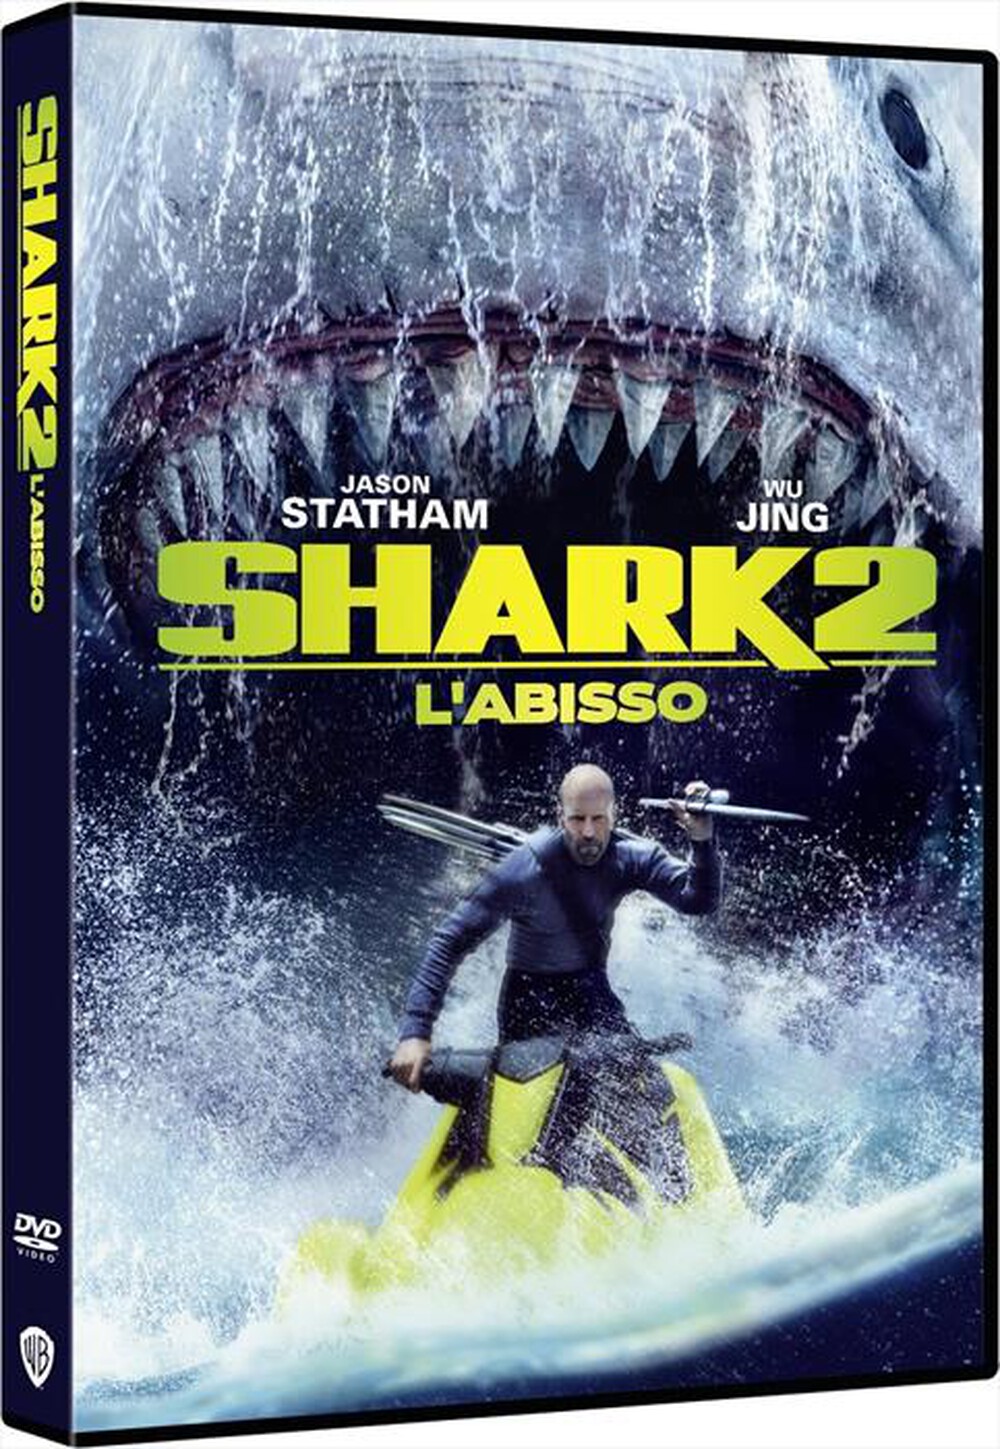 "WARNER HOME VIDEO - Shark 2 - L'Abisso"